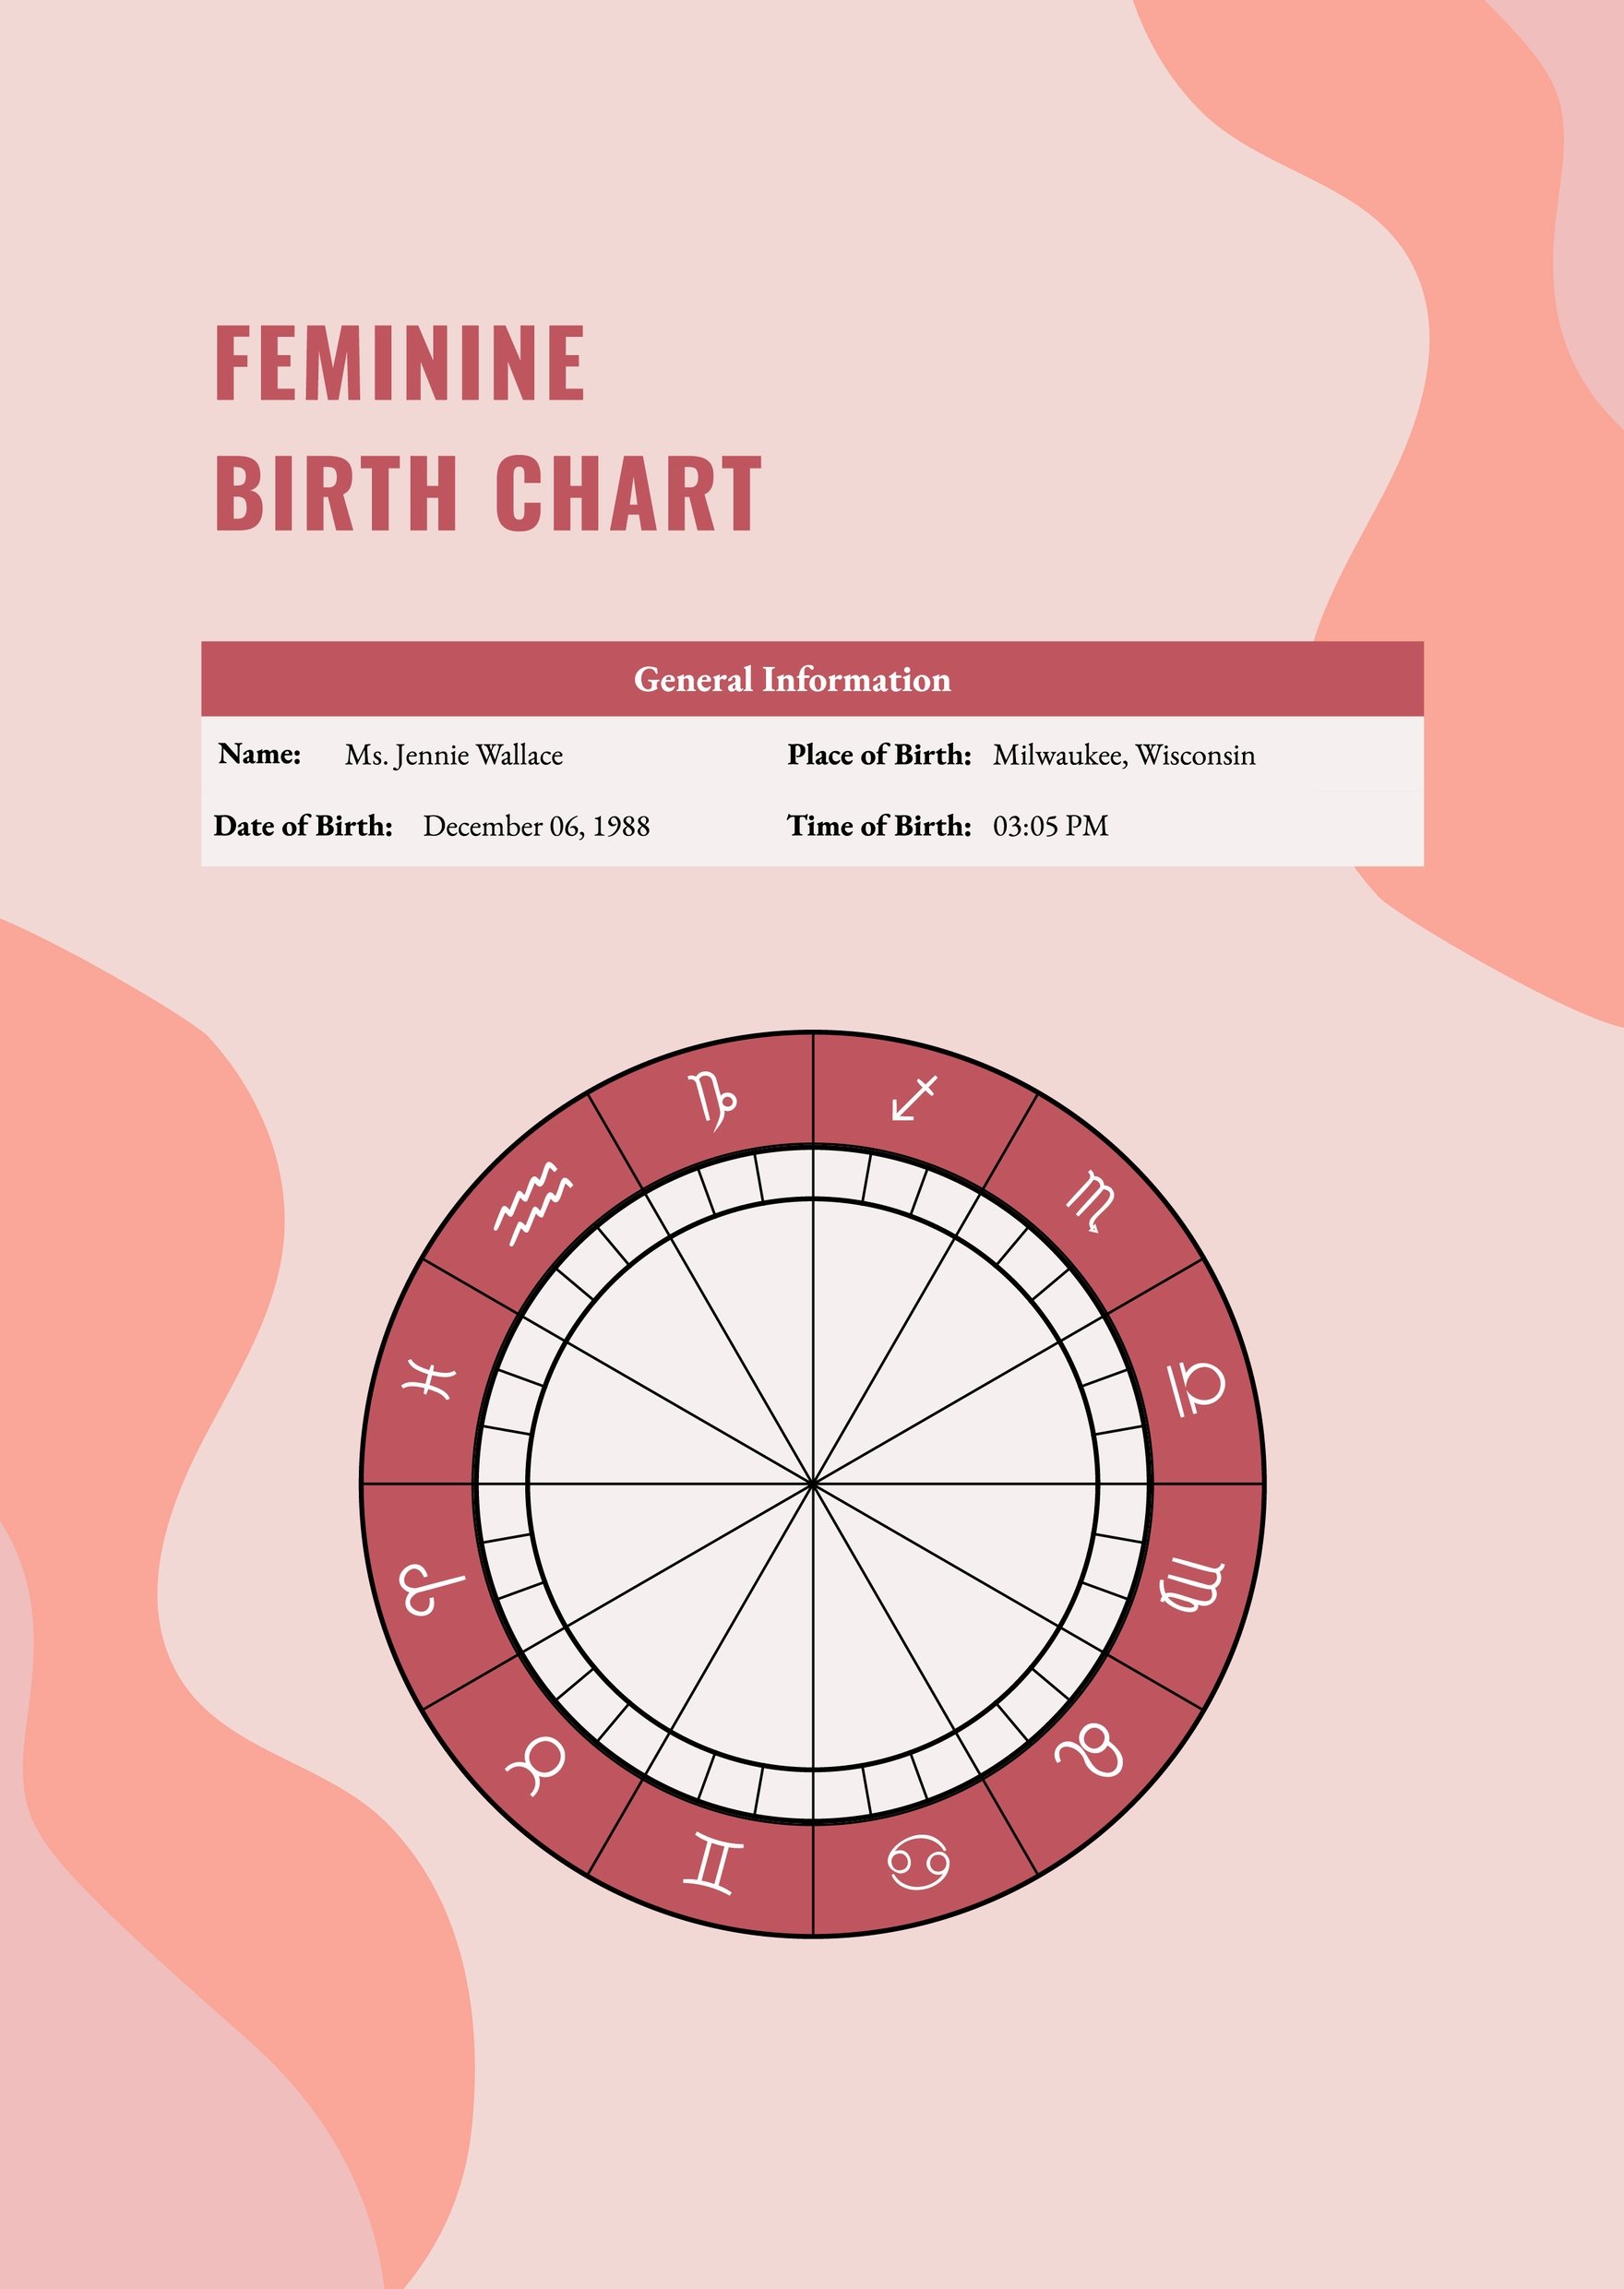 Feminine Birth Chart Template in PDF, Illustrator